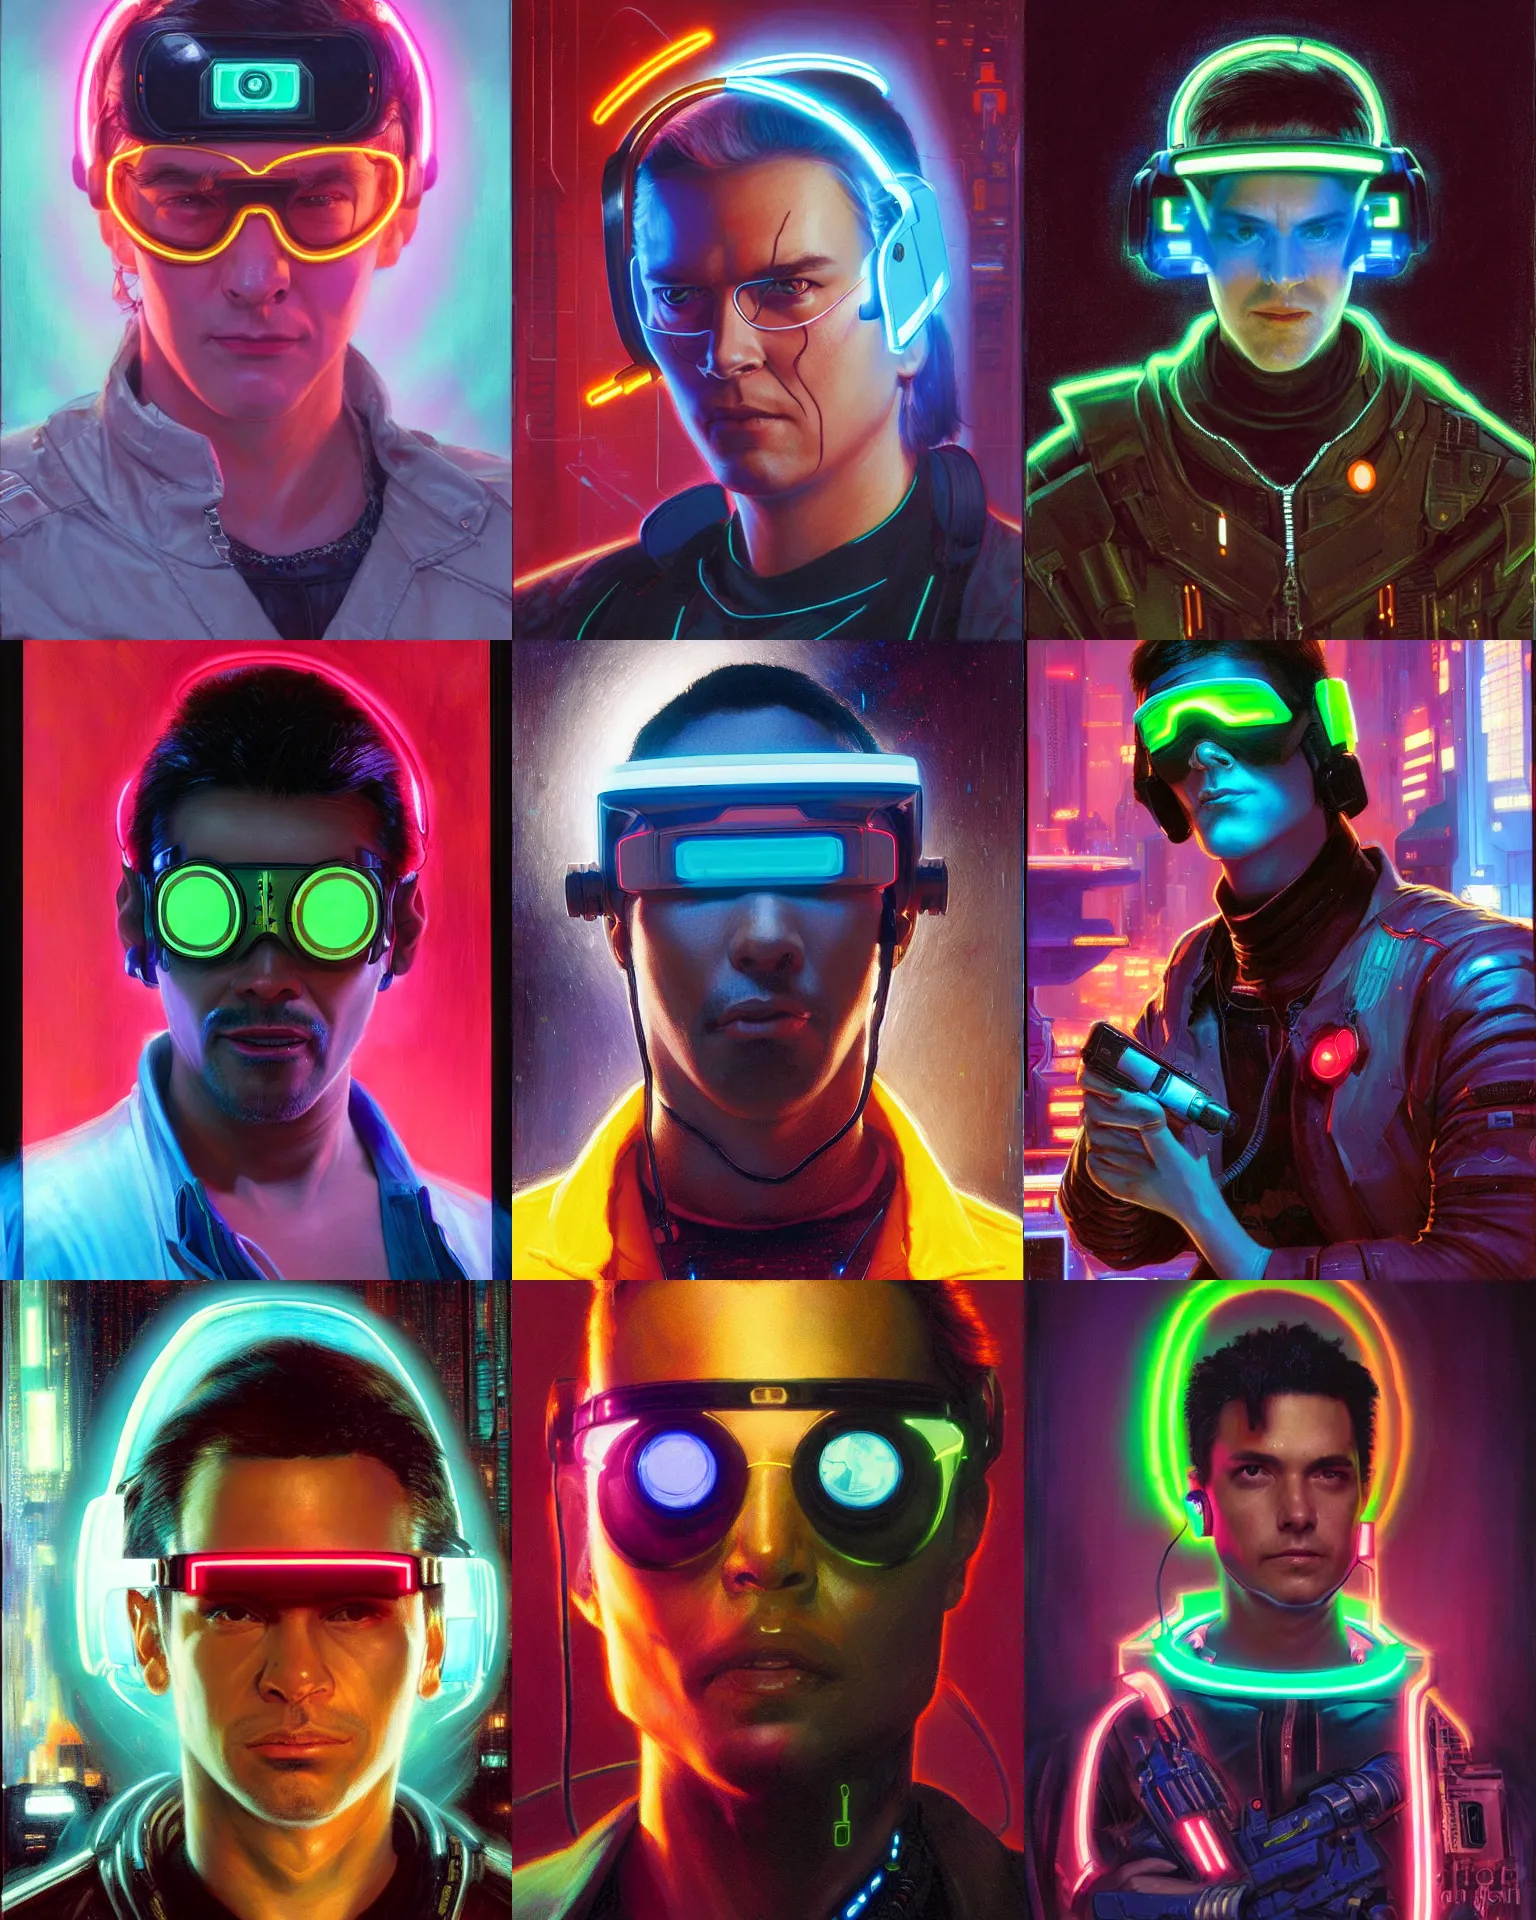 Prompt: neon cyberpunk hacker with glowing geordi visor and headset headshot portrait painting by donato giancola, kilian eng, john berkley, hayao miyazaki, j. c. leyendecker, mead schaeffer fashion photography